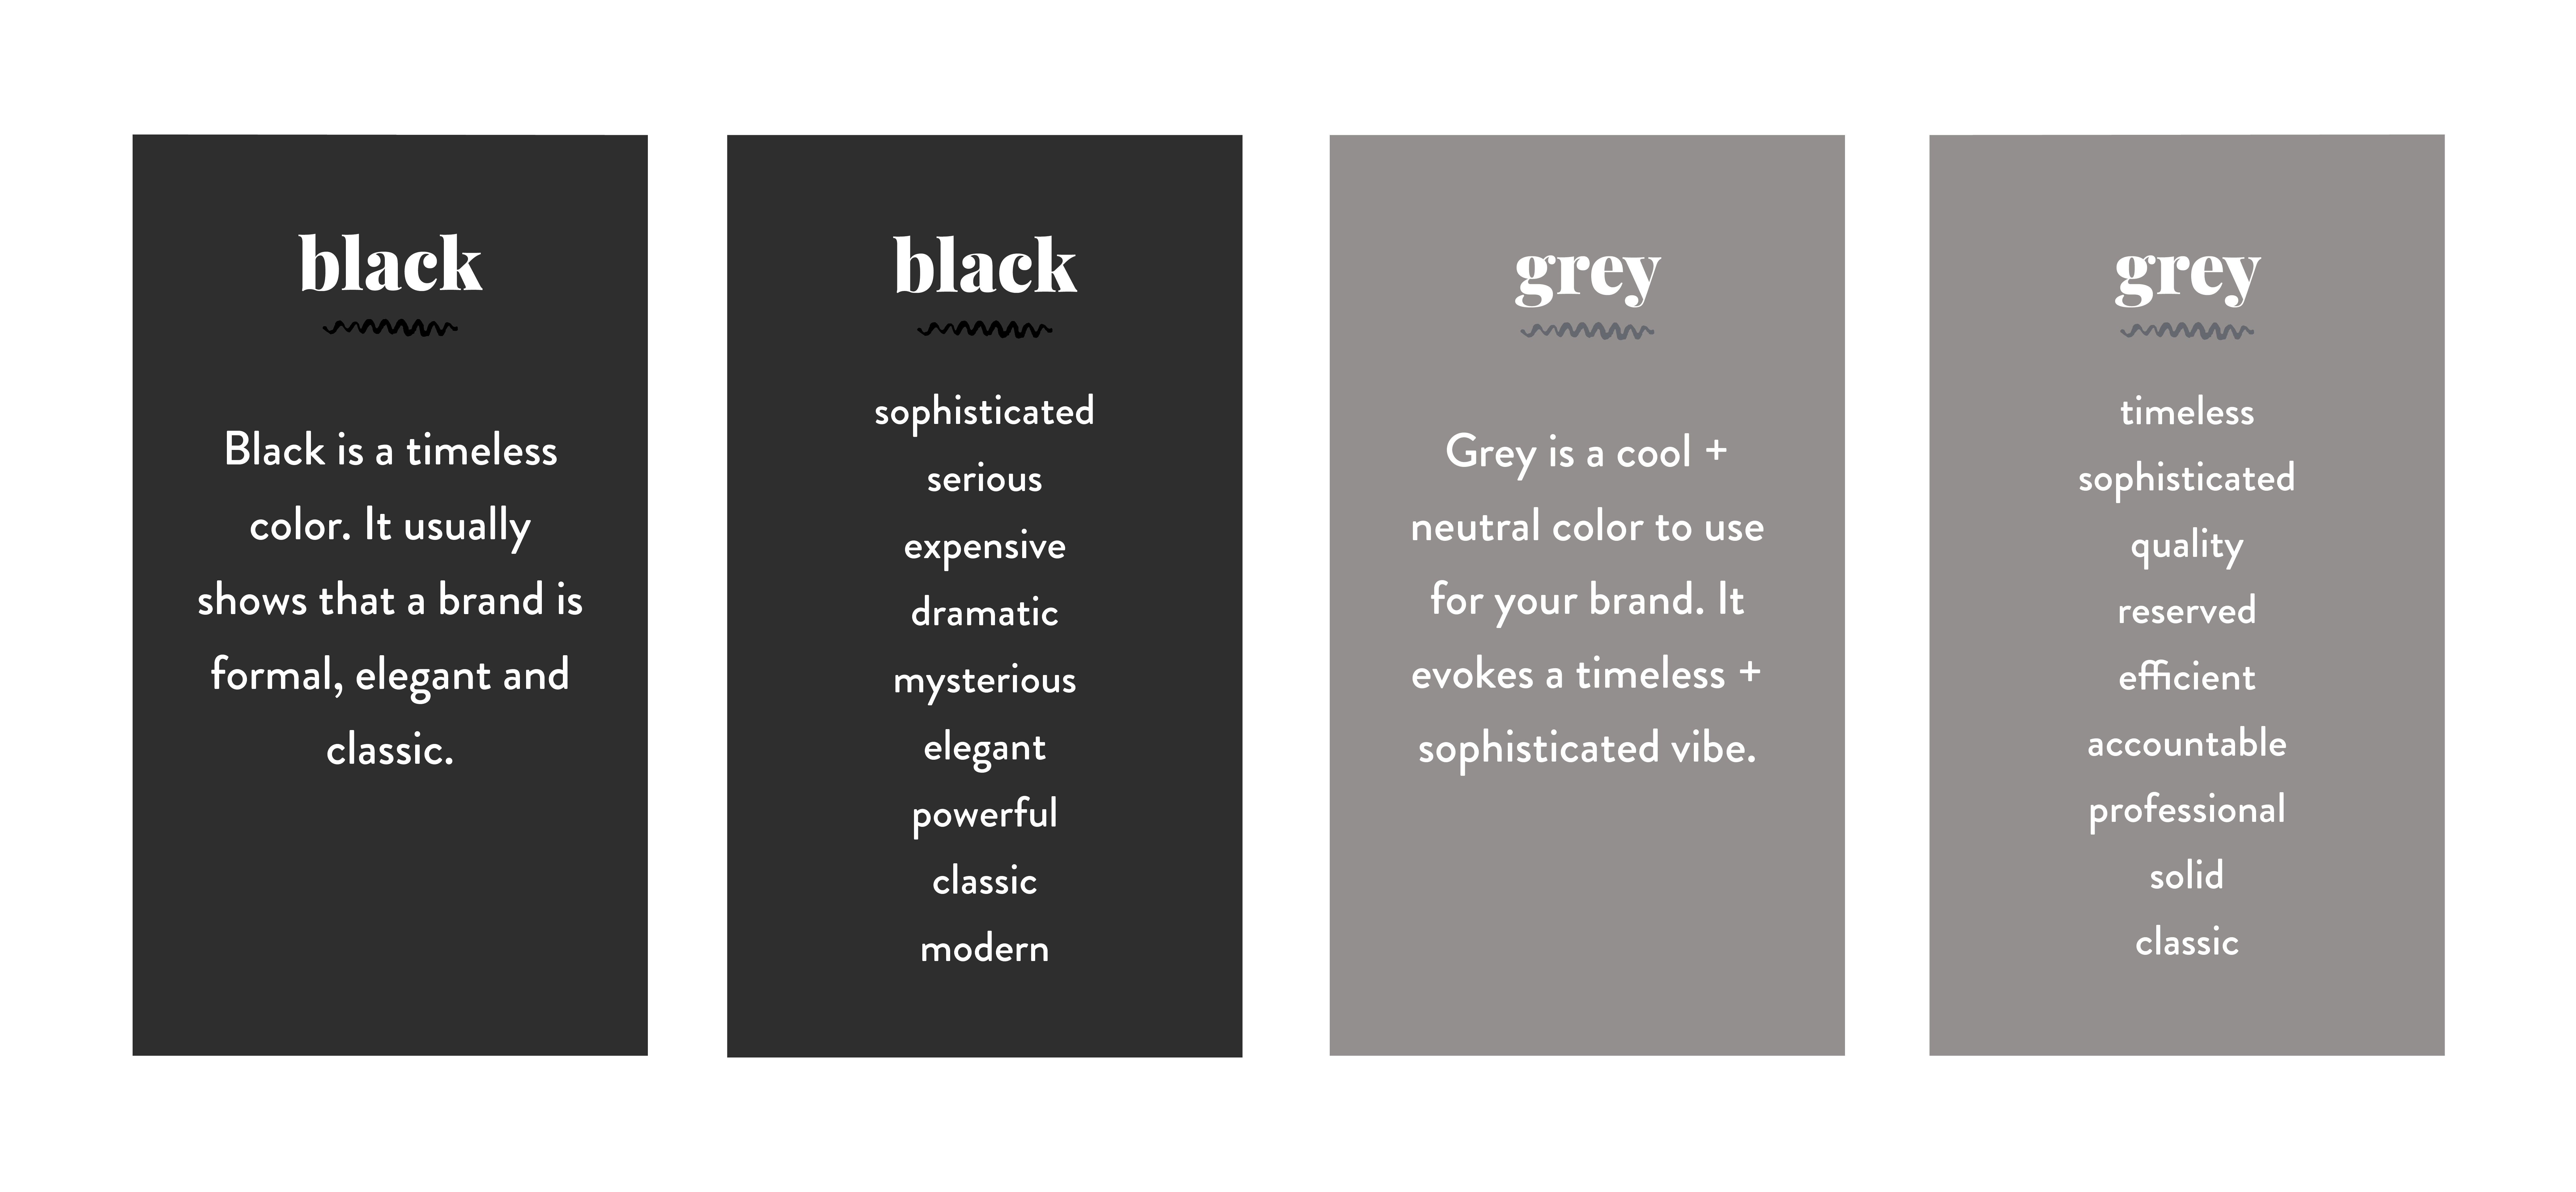 Psychology behind black and grey